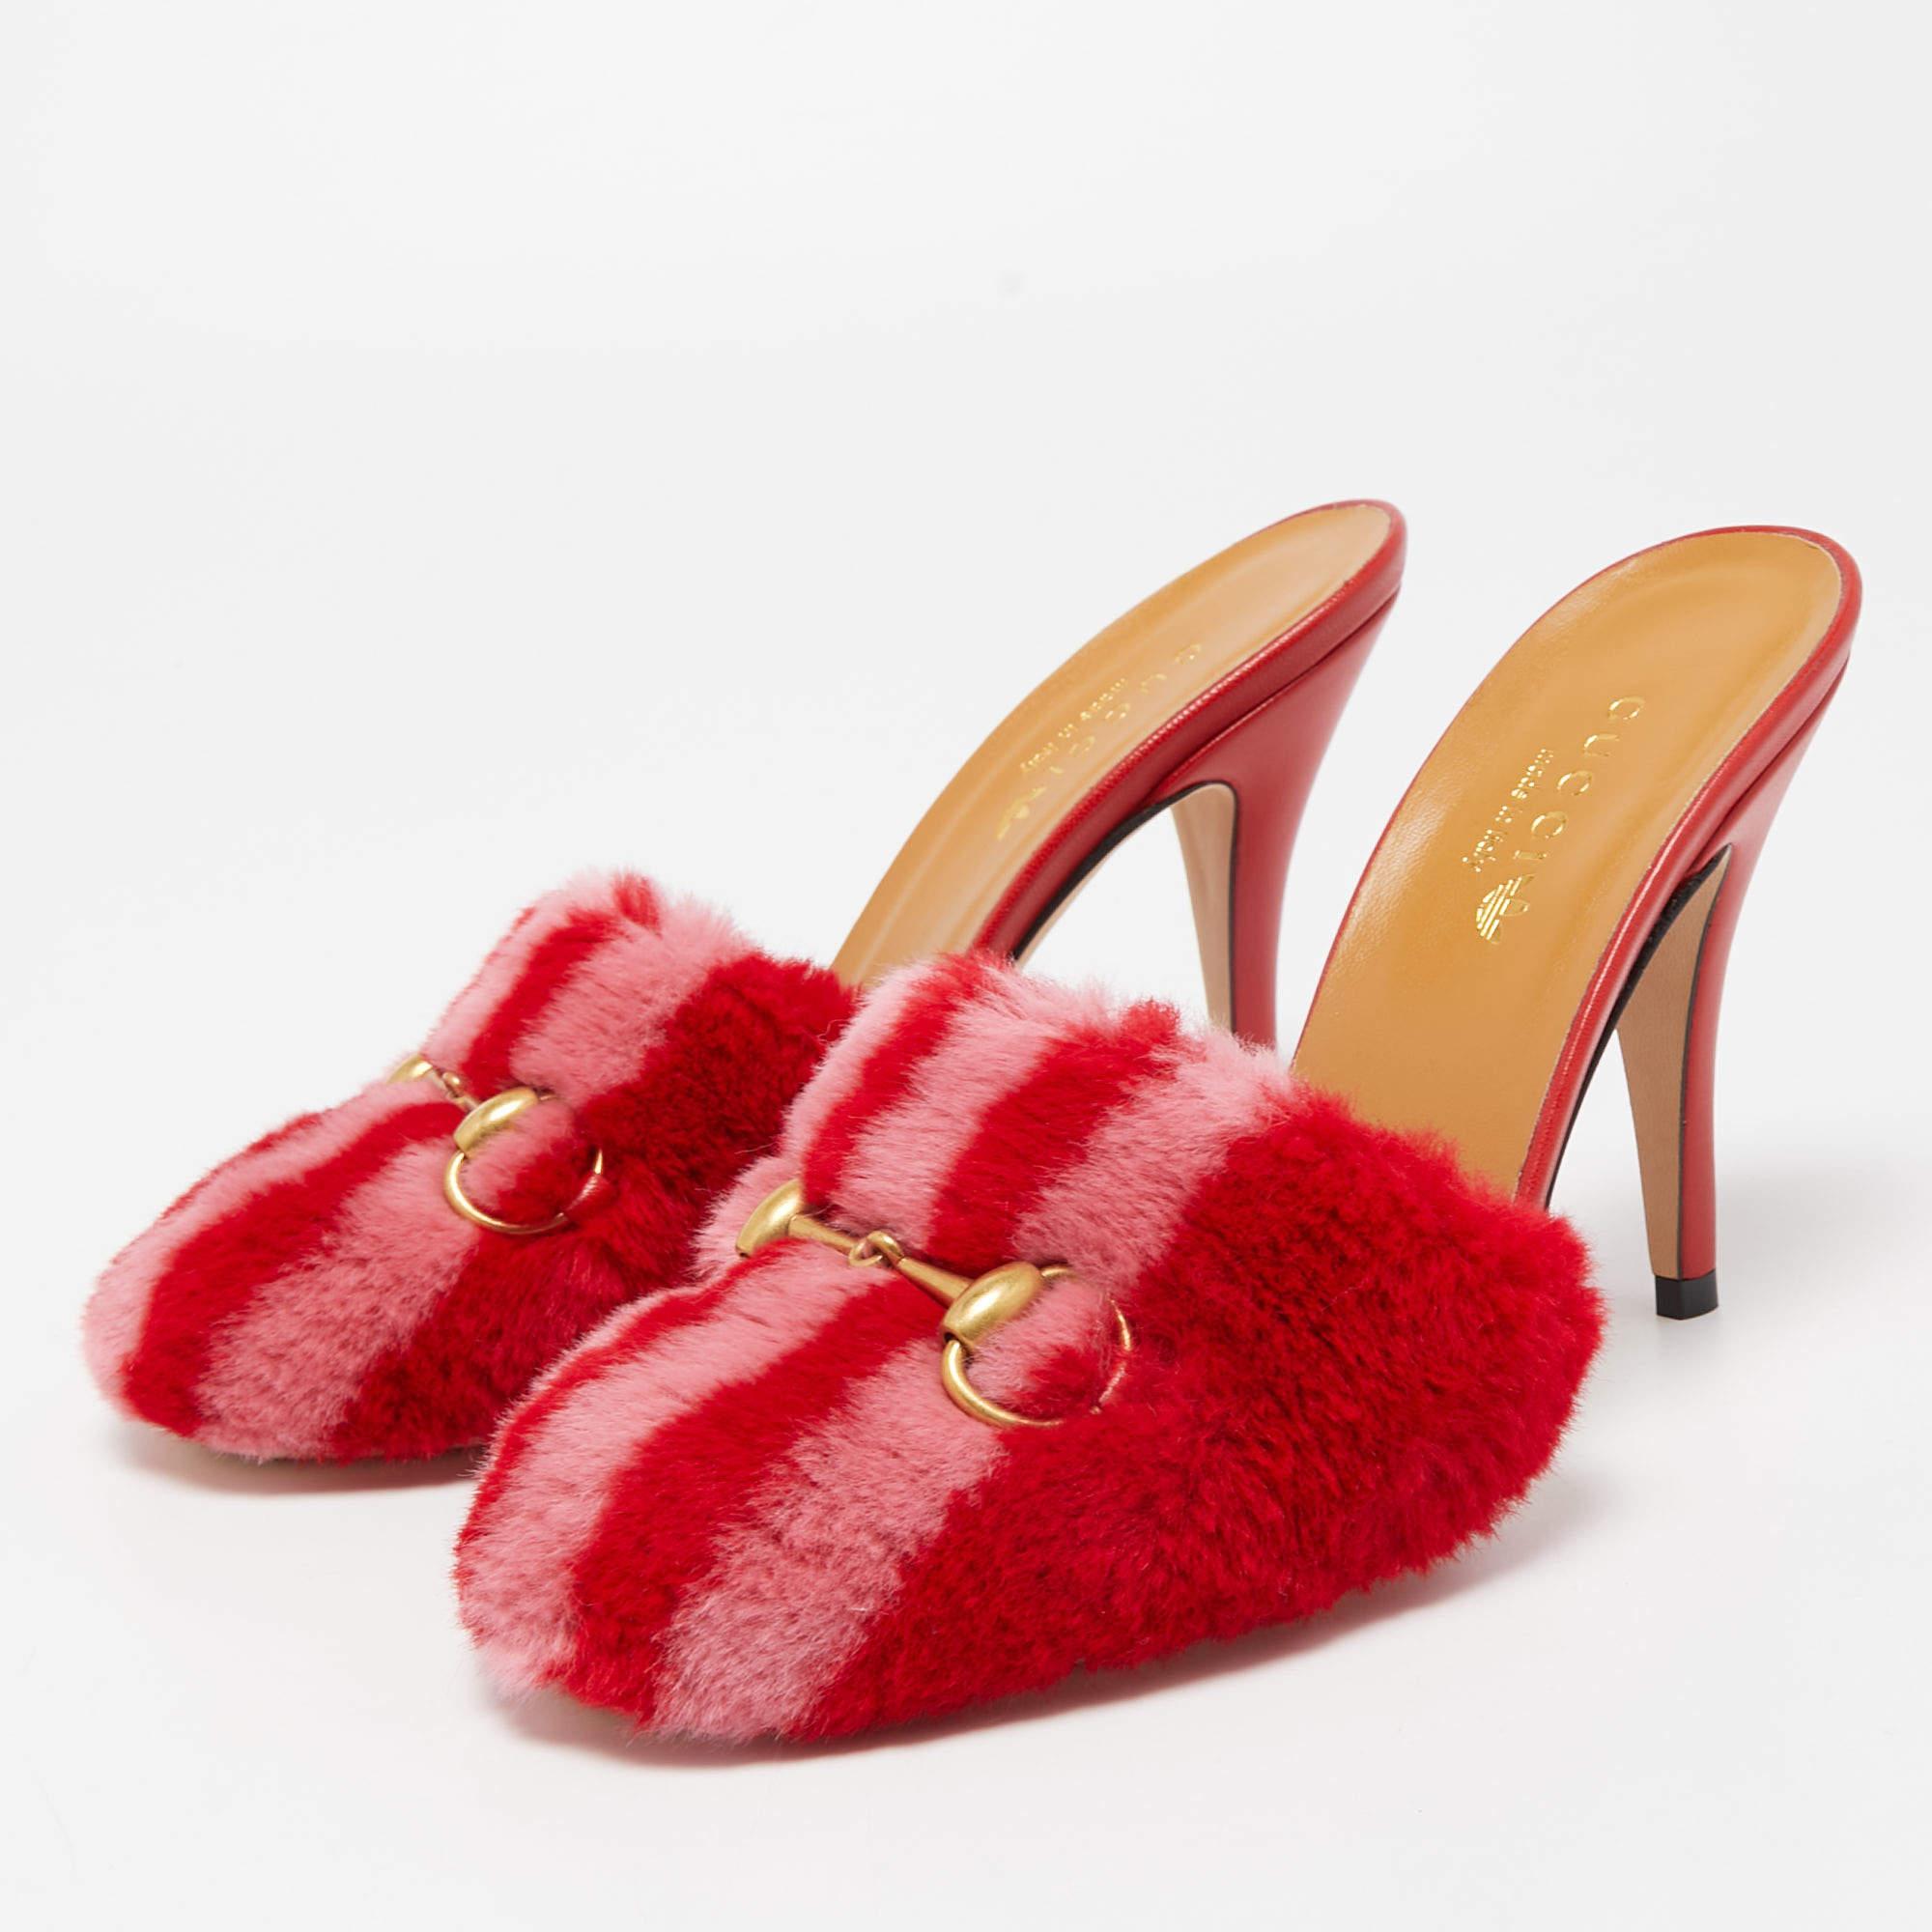 Gucci x Adidas Red/Pink Shearling Fur Horsebit Mules Size 36.5 4